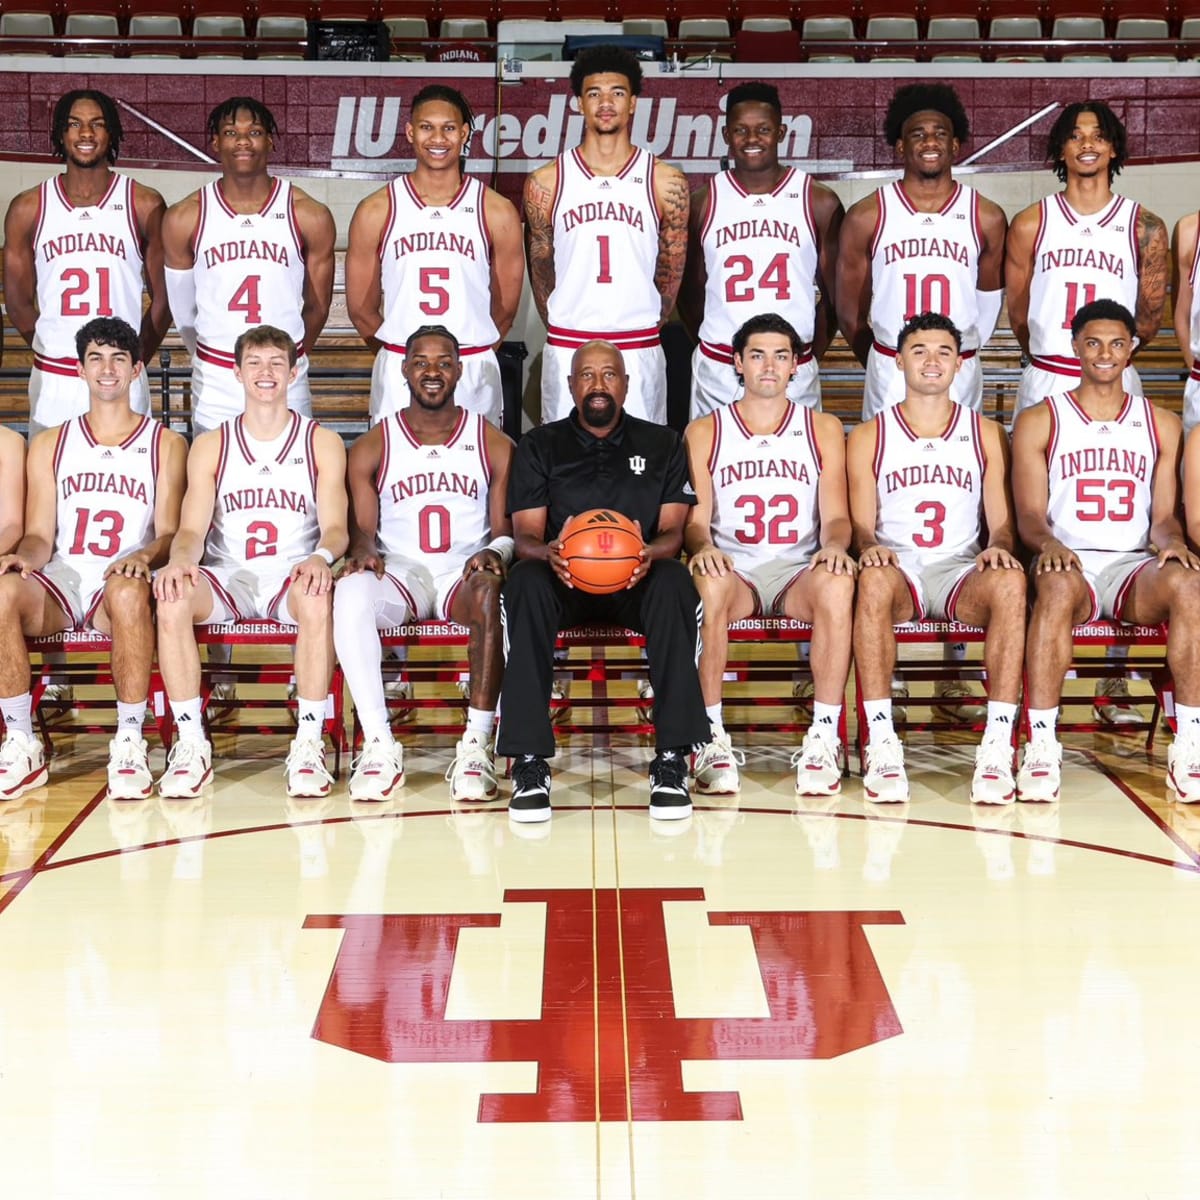 The+Indiana+Basketball+Team.